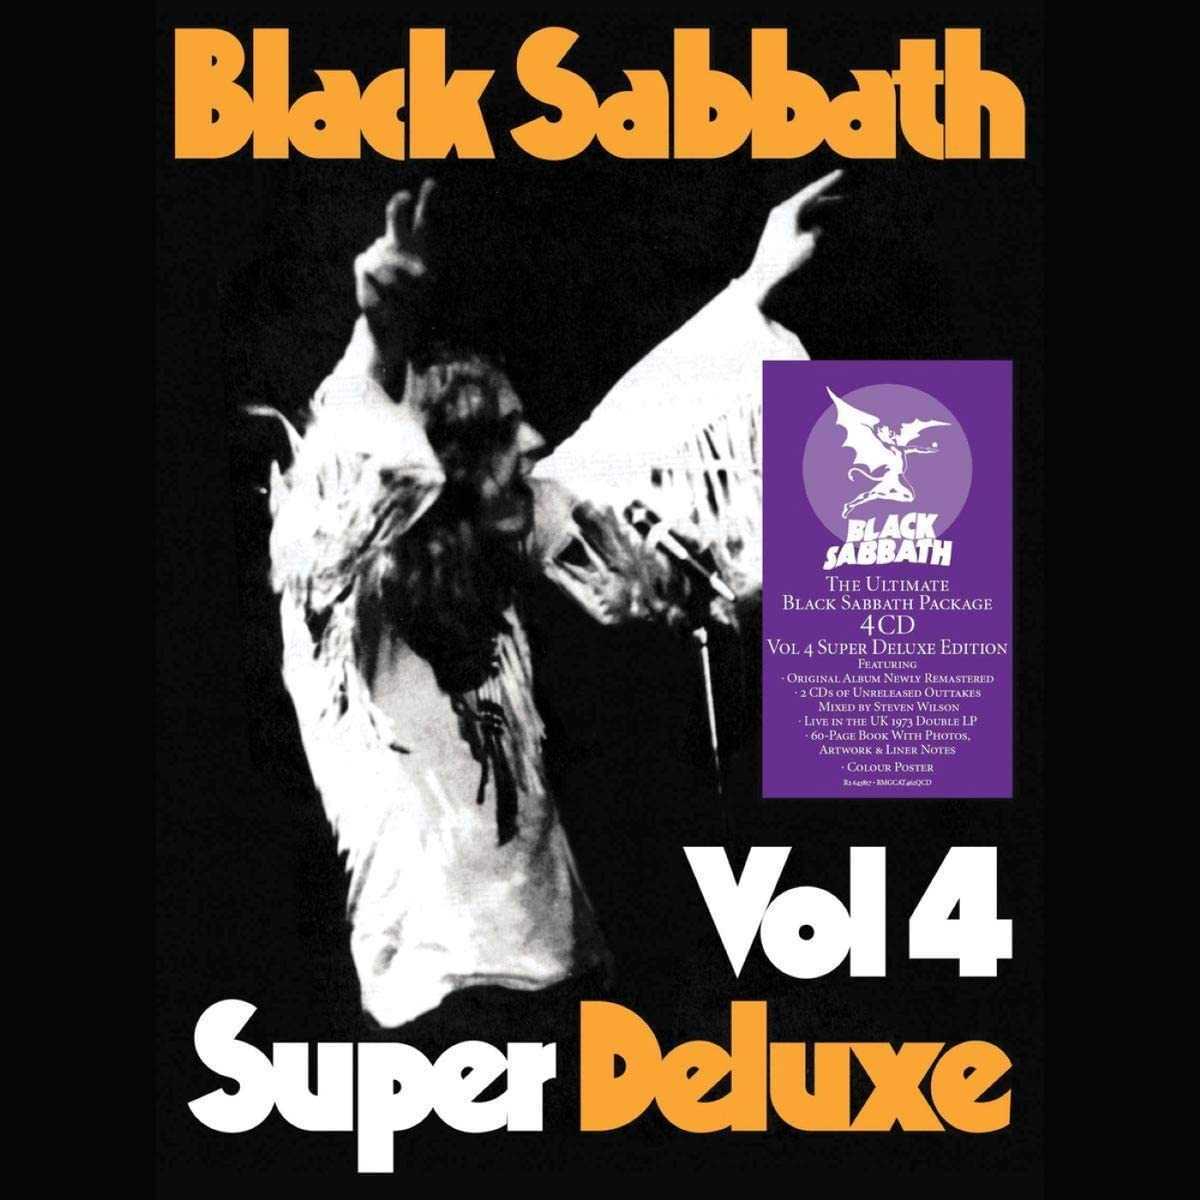 BLACK SABBATH - VOL.4 - 4CD - Super Deluxe Edition with Hardback Book & Poster